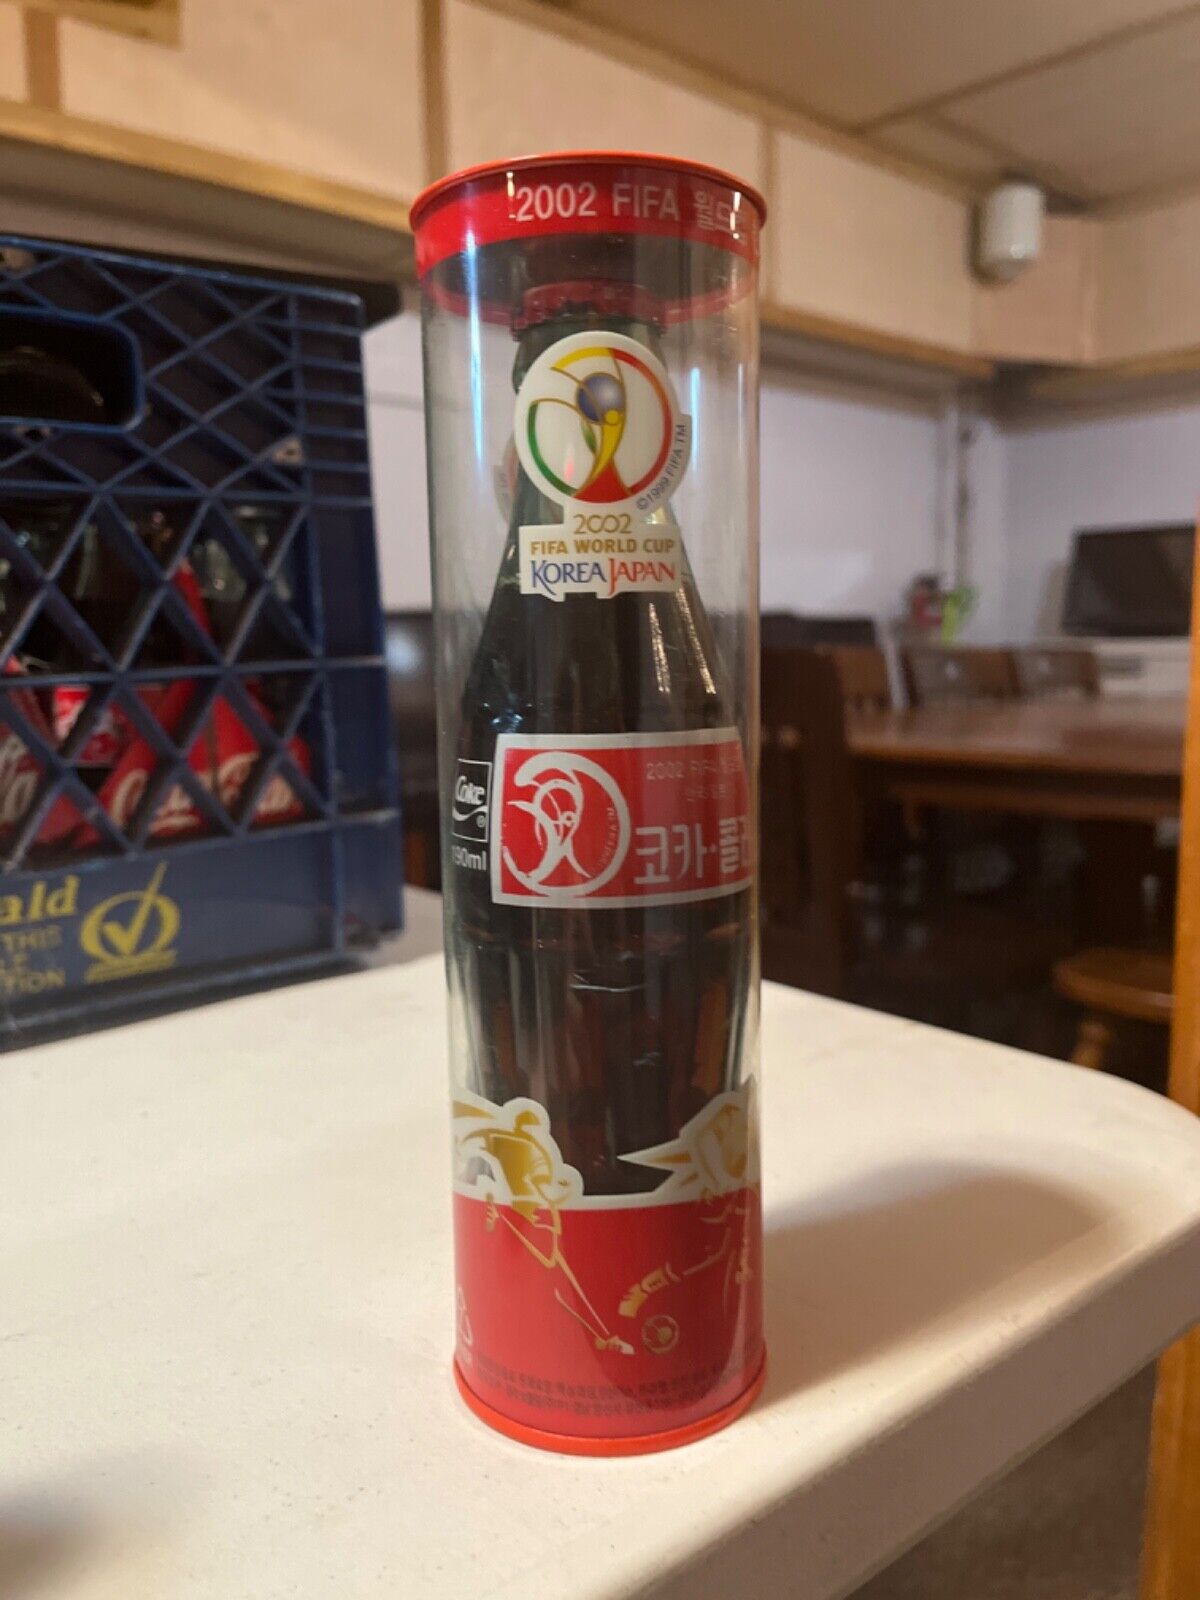 2002 Korea Japan FIFA World Cup Limited Edition Coca Cola Coke Bottle